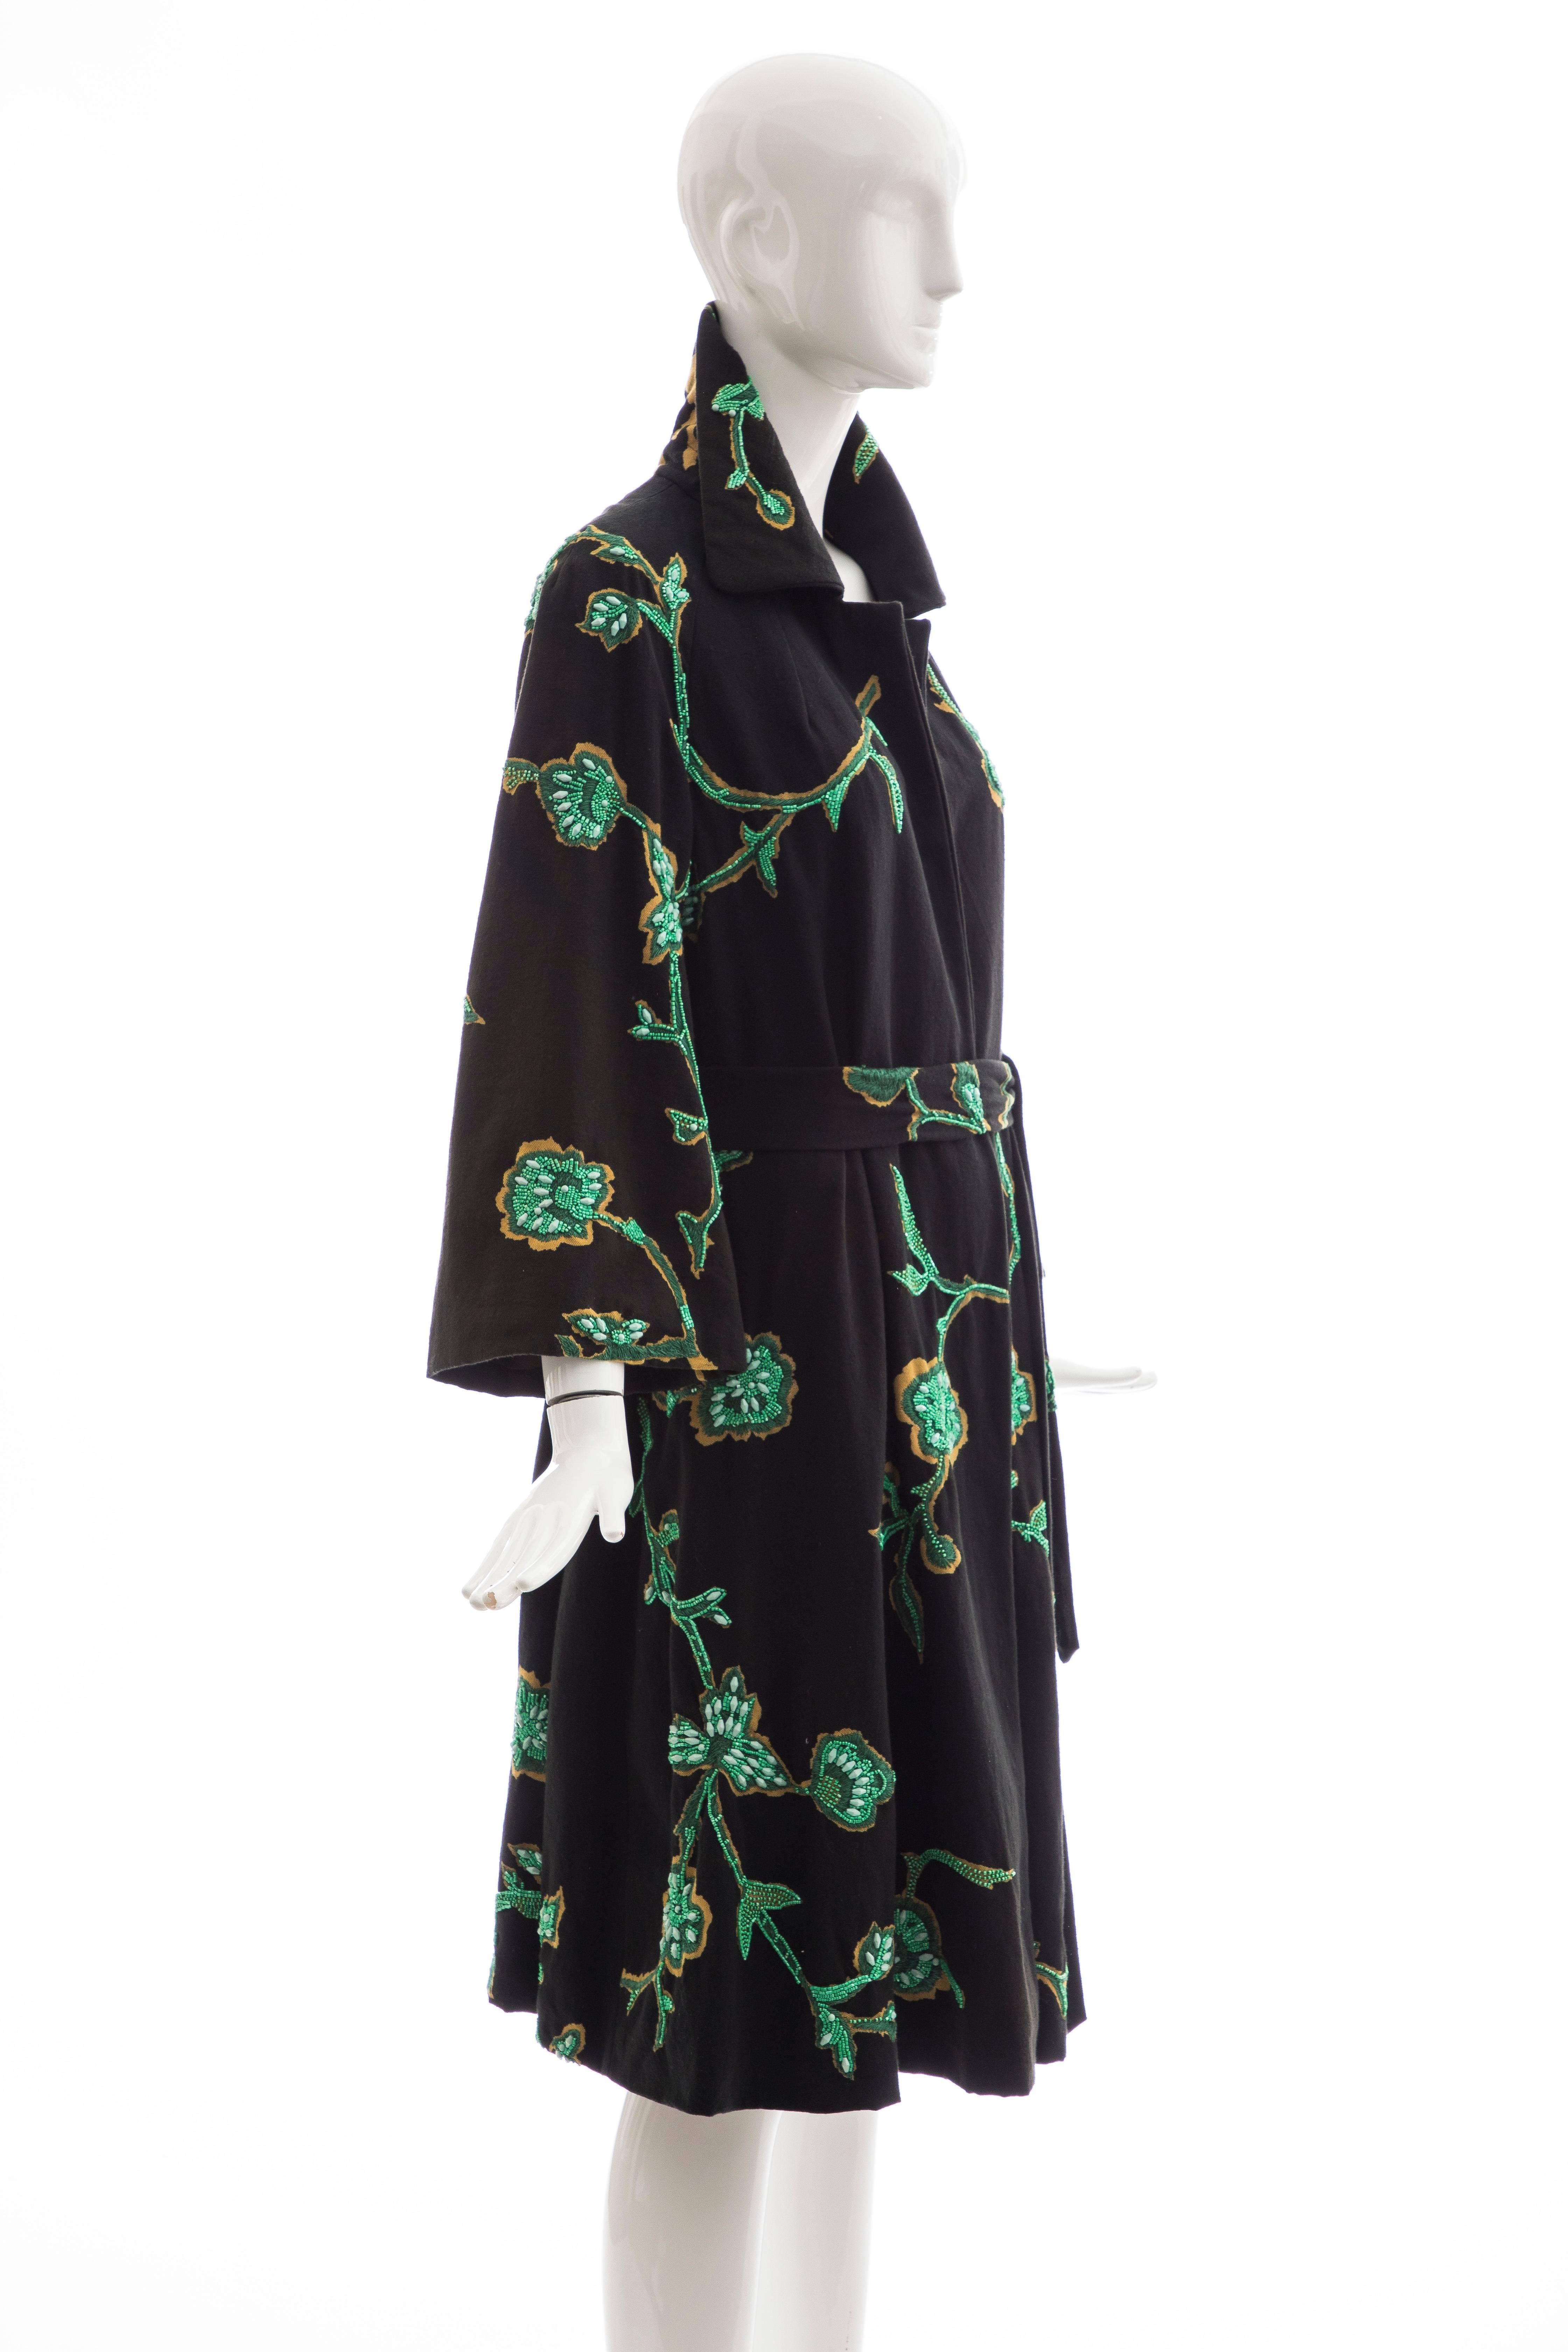 Women's Dries Van Noten Runway Black Cotton Embroidered Beaded Coat, Fall 2005 For Sale